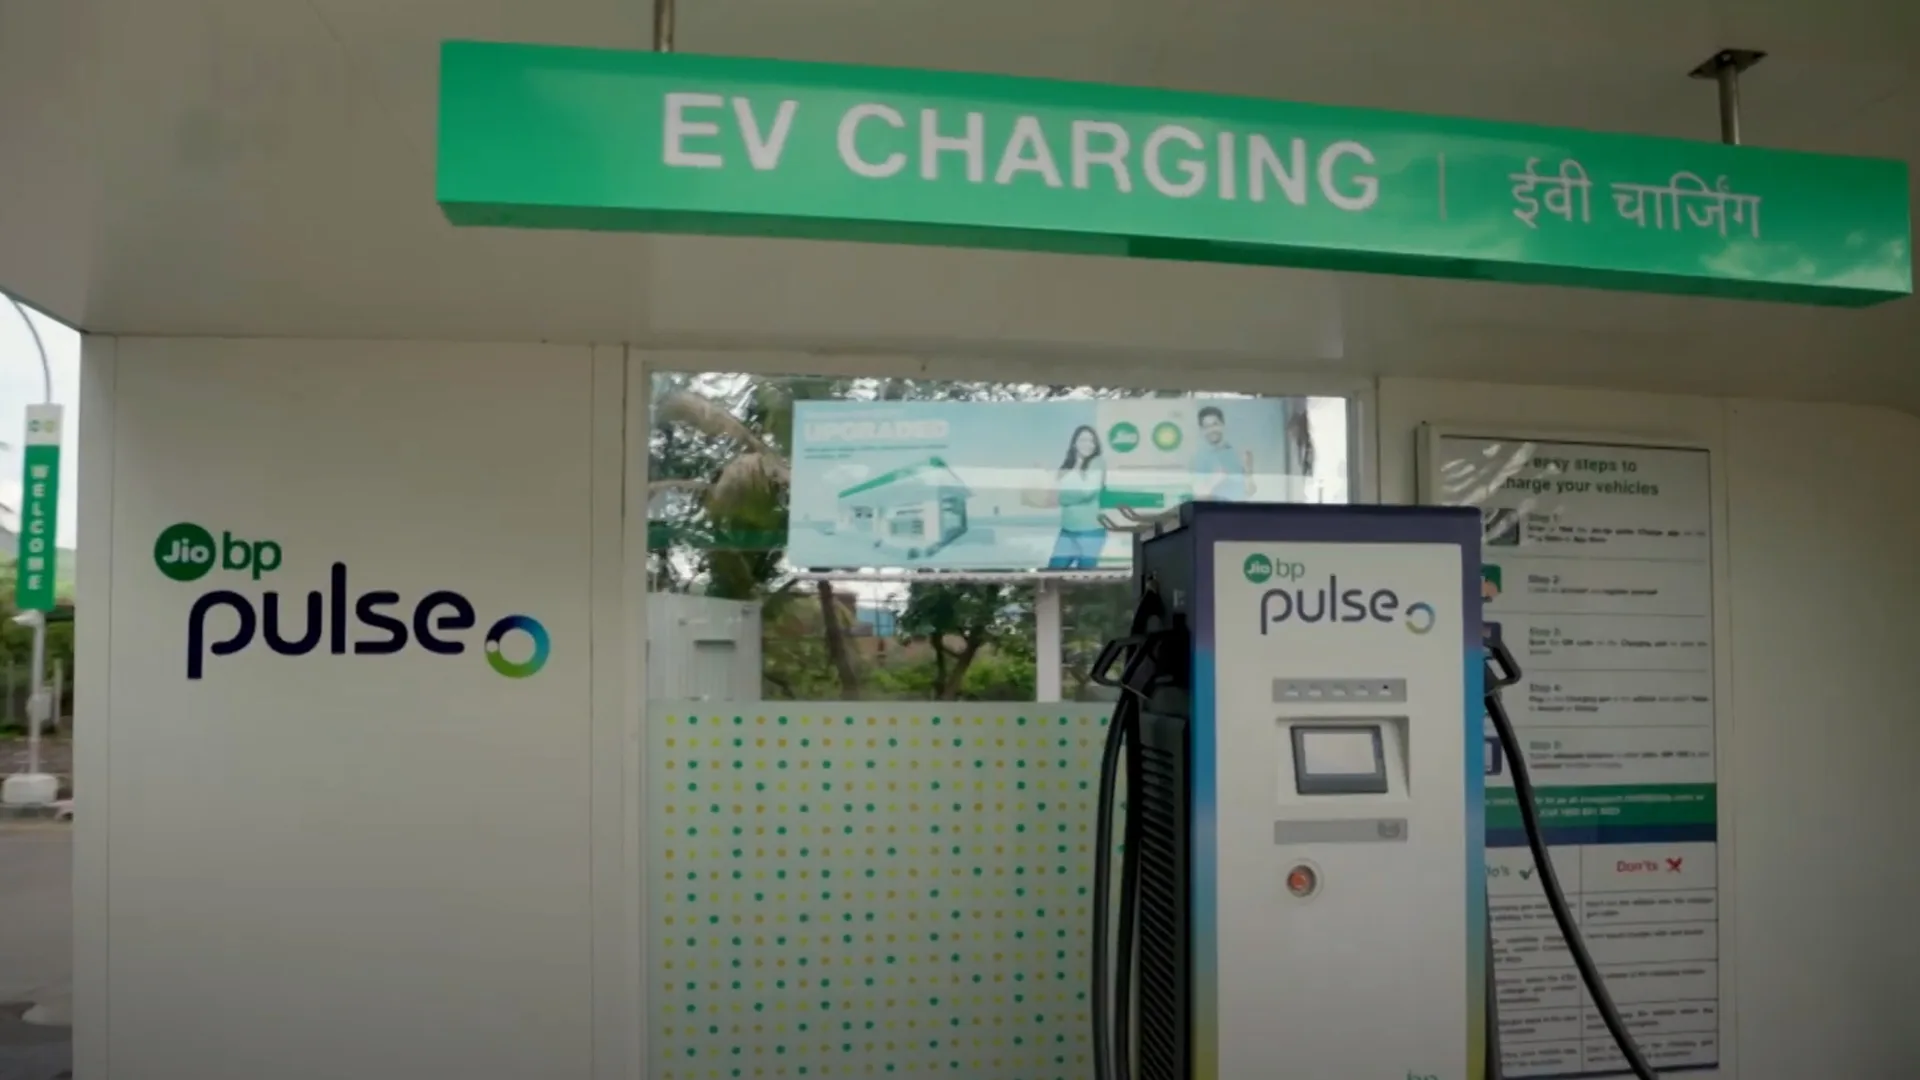 Jio-bp Pulse EV Charging Station